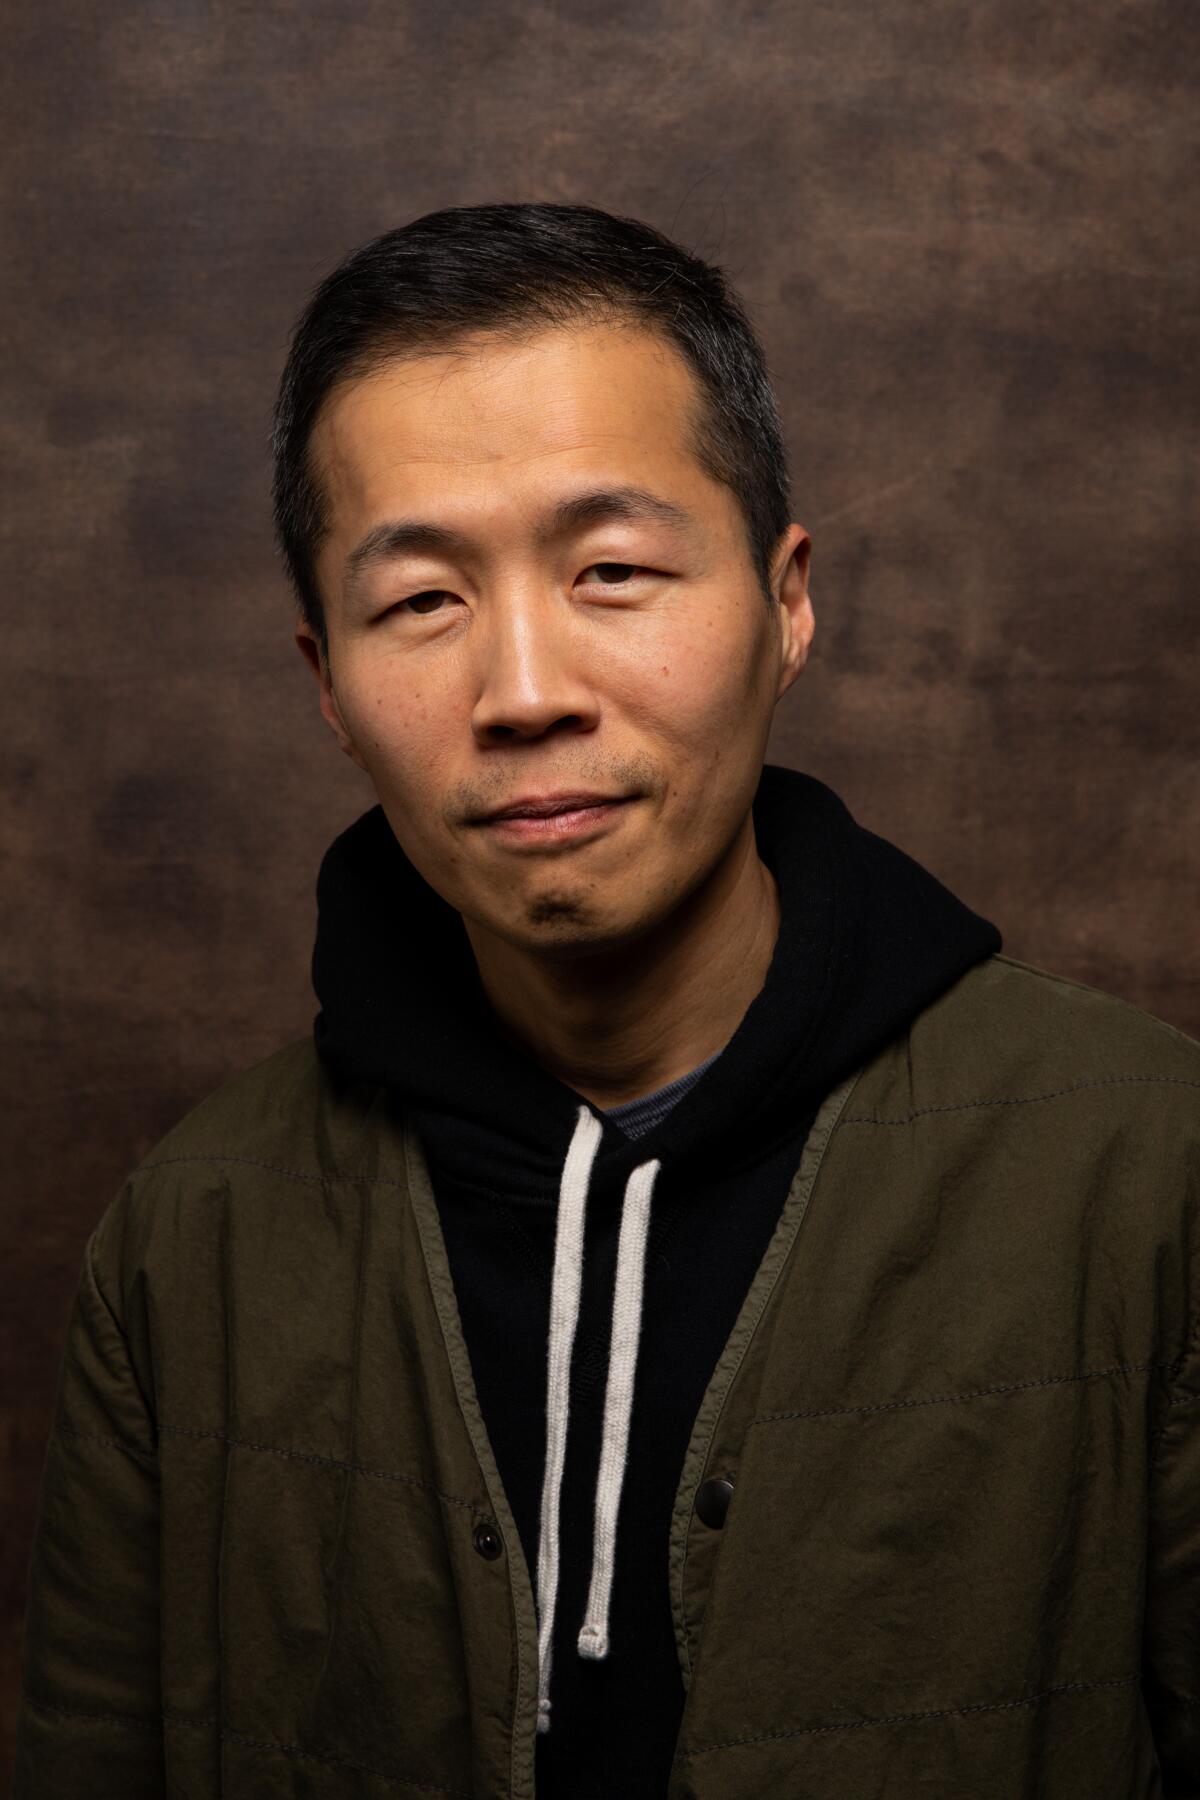 "Minari" writer-director Lee Isaac Chung